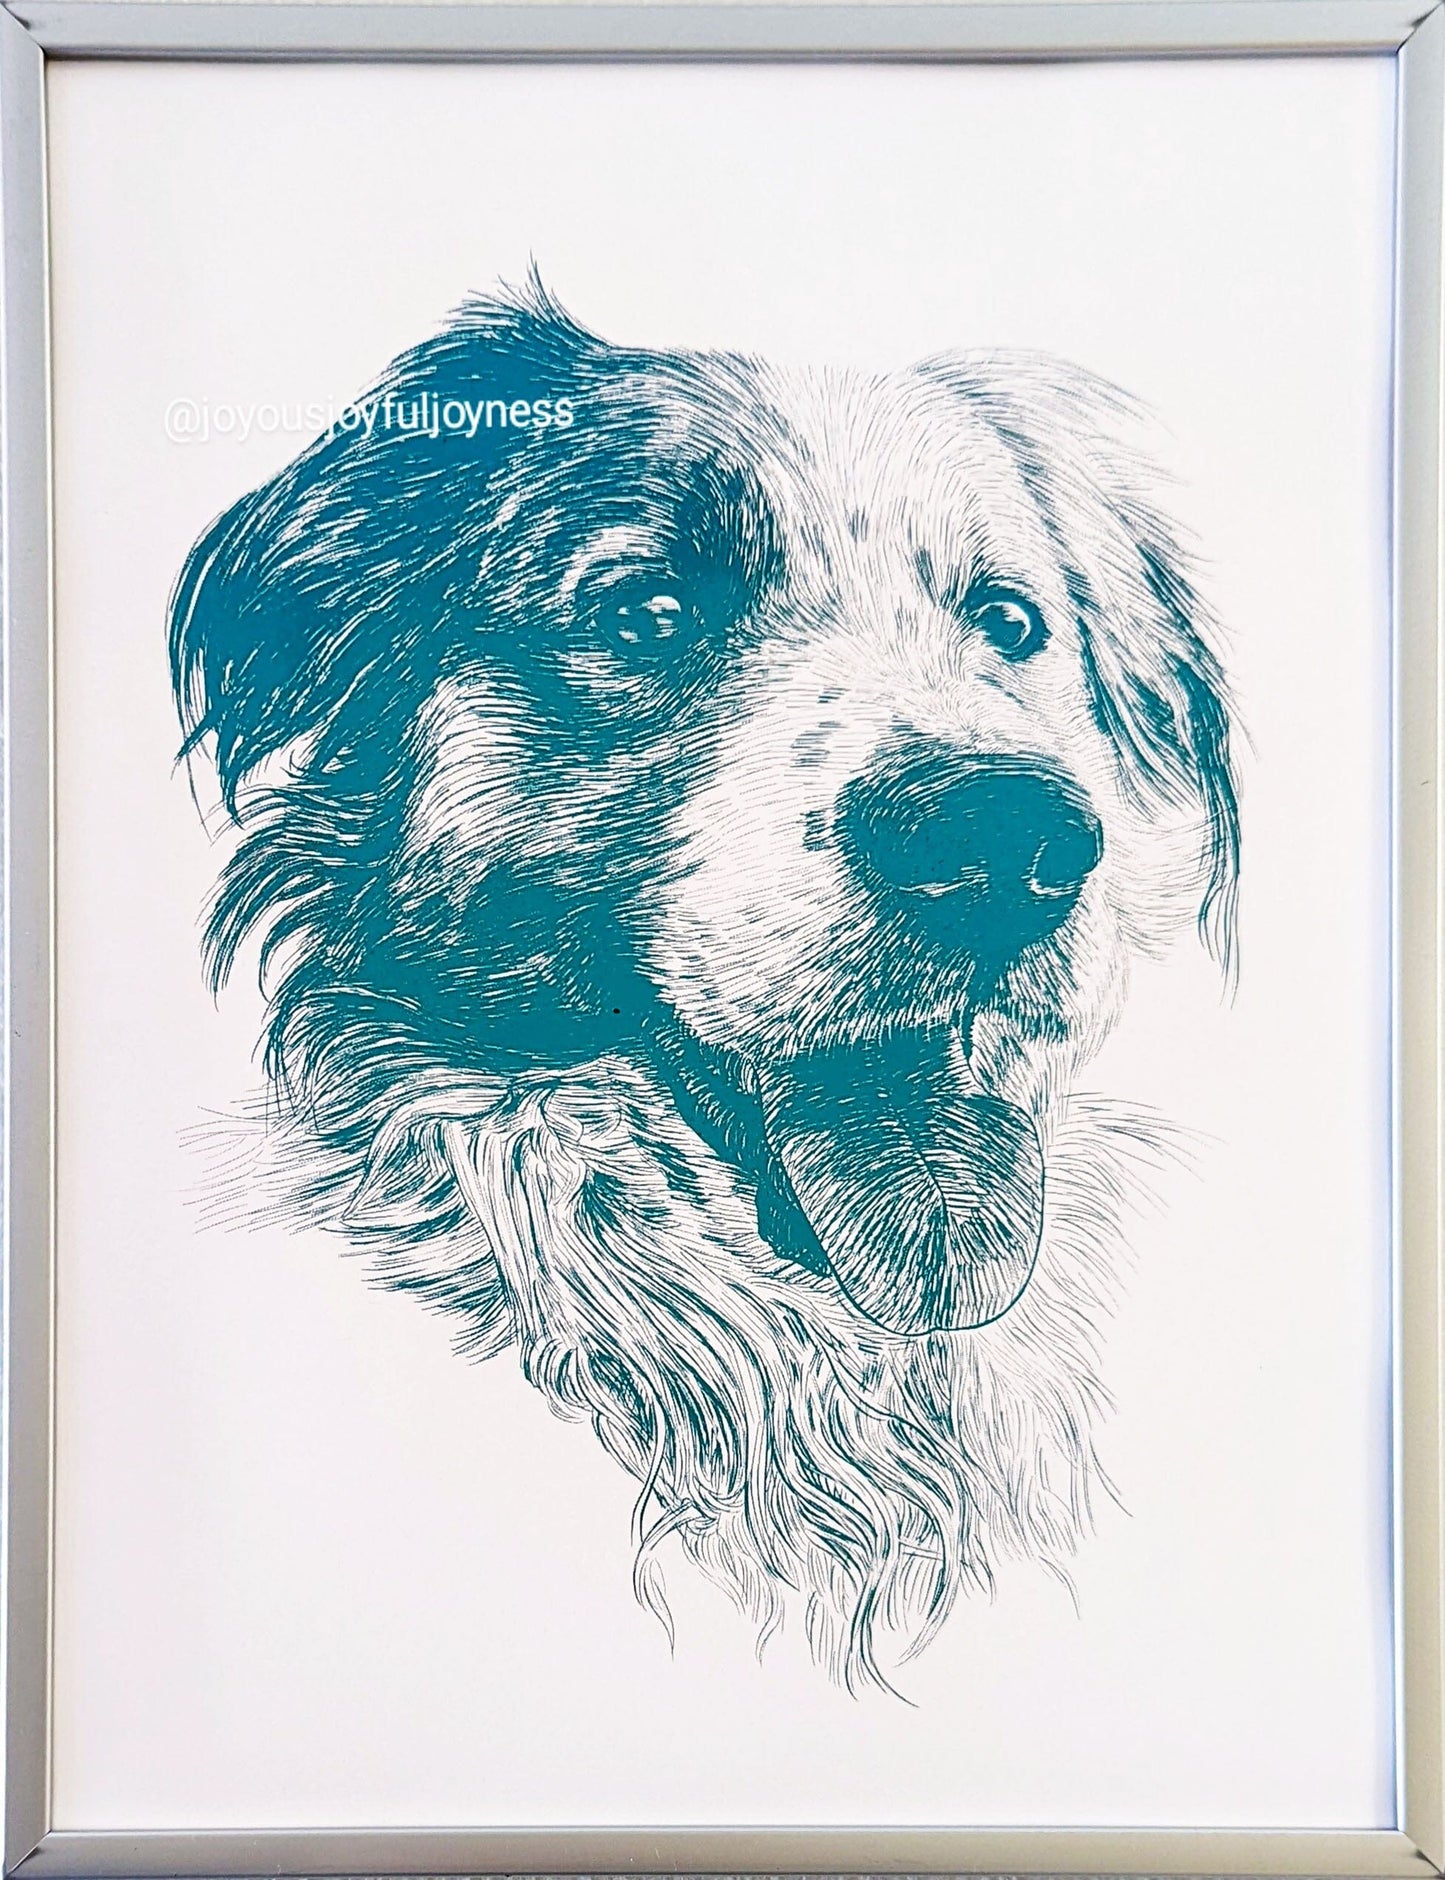 Custom Portraits Of Dogs Posters, Prints, & Visual Artwork JoyousJoyfulJoyness 